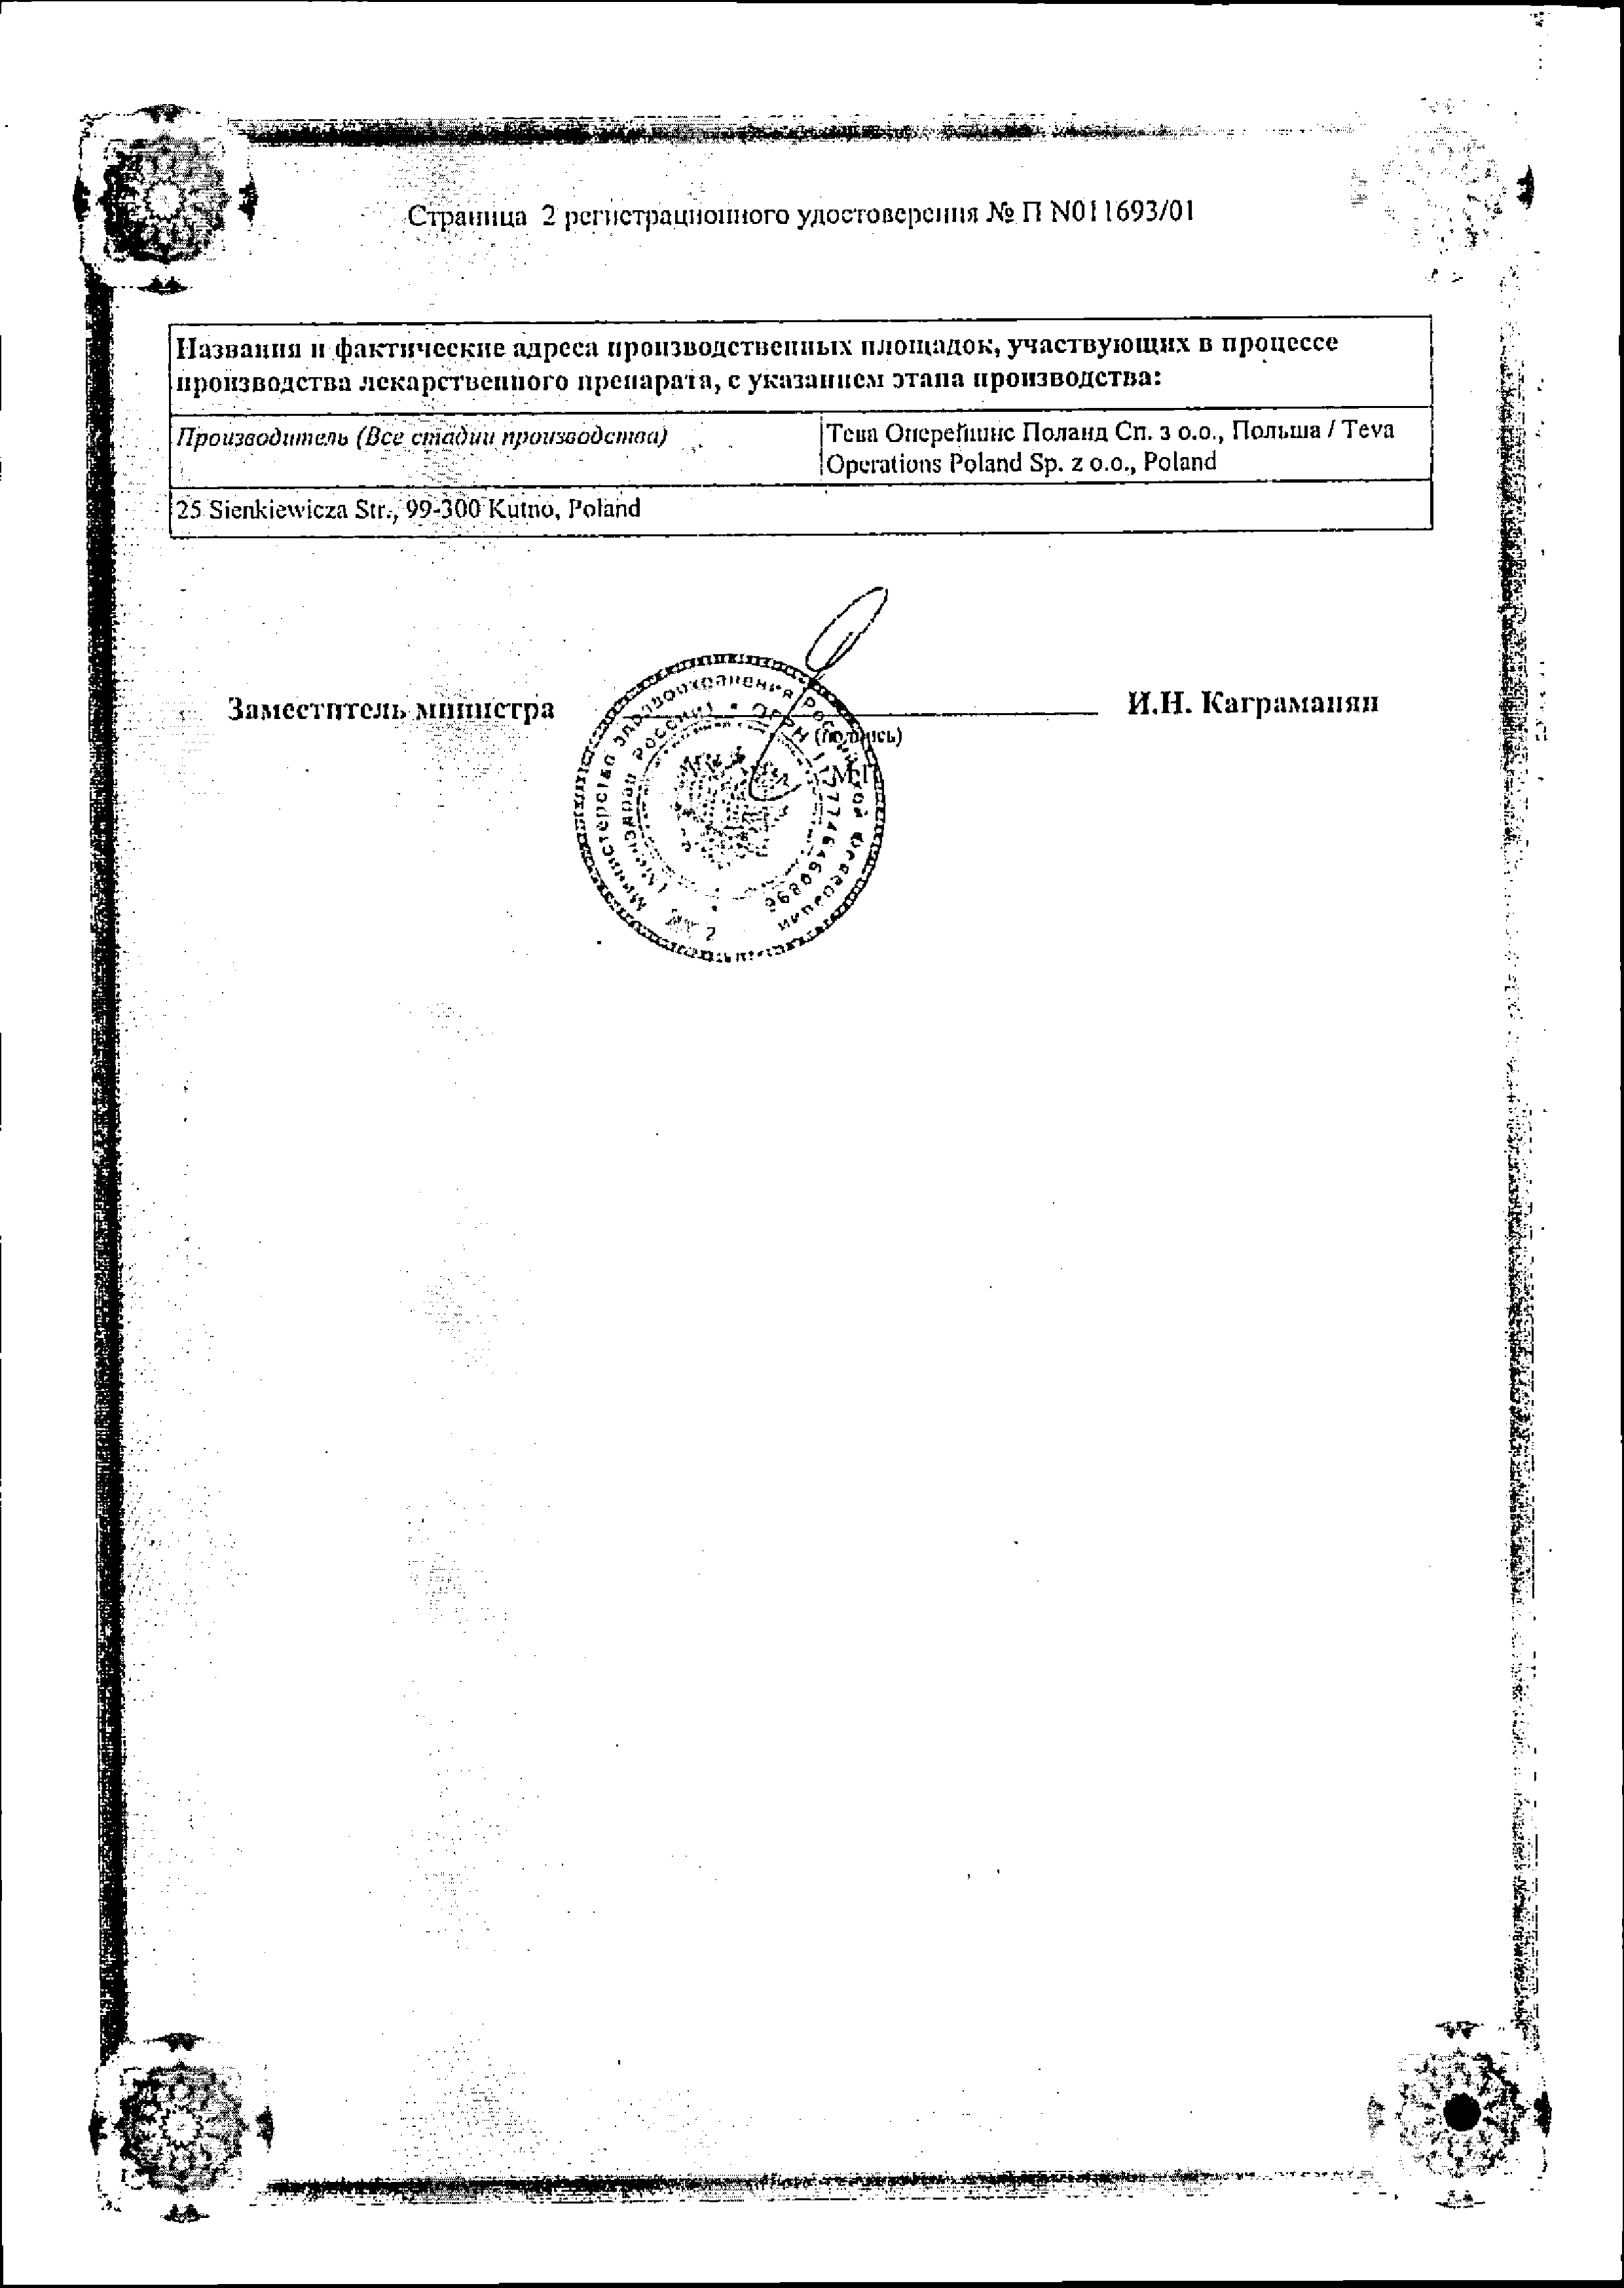 Цинктерал-Тева сертификат